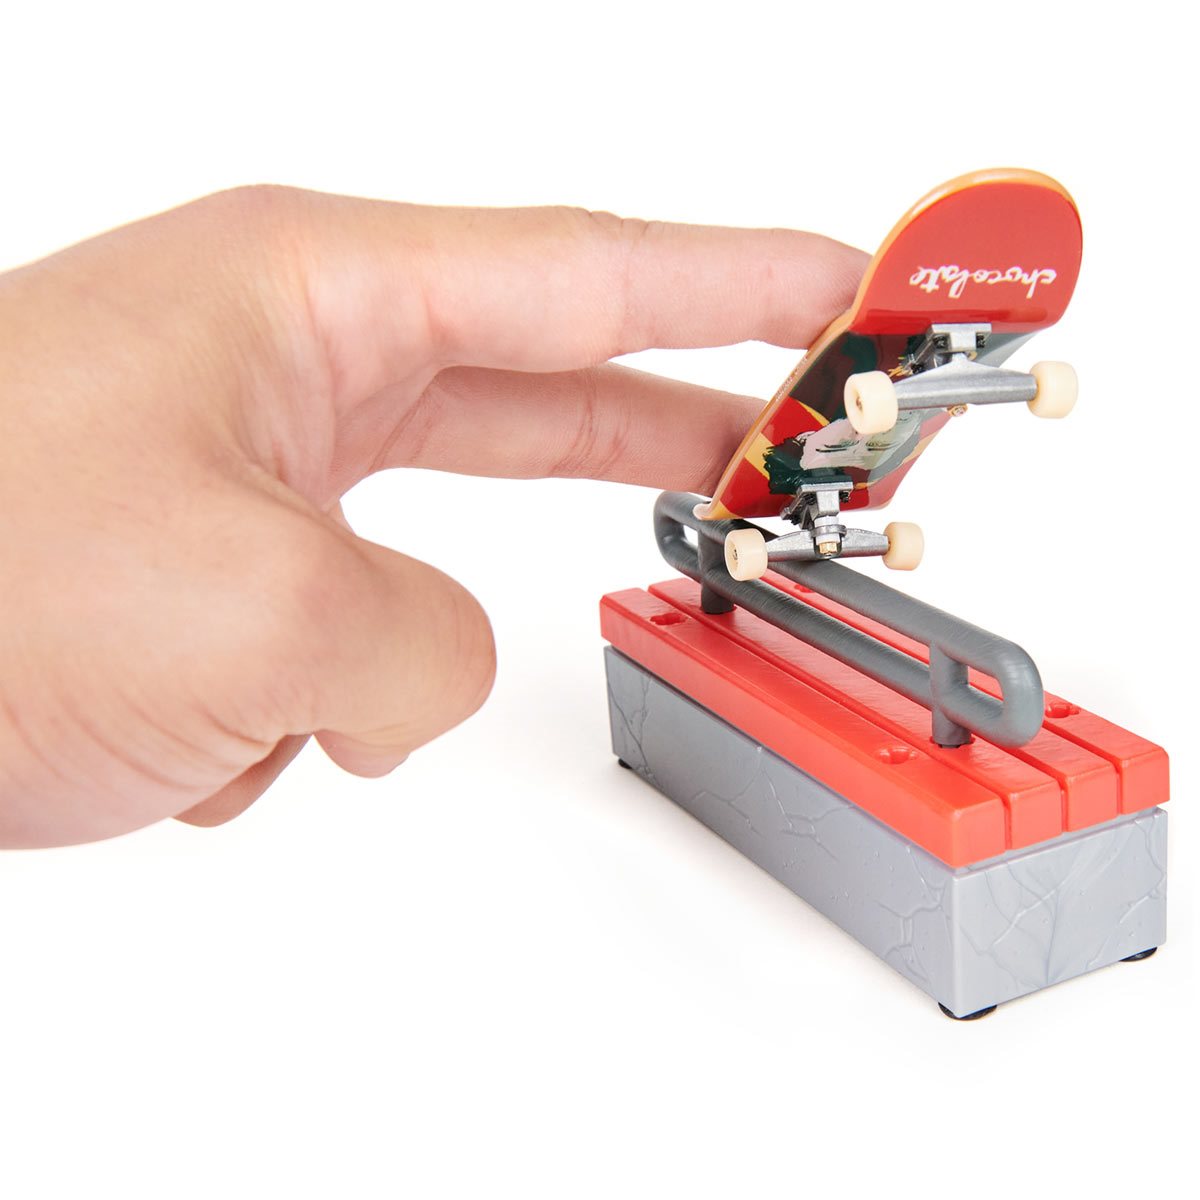 Versus 2 Finger Skate Tech Deck Pack